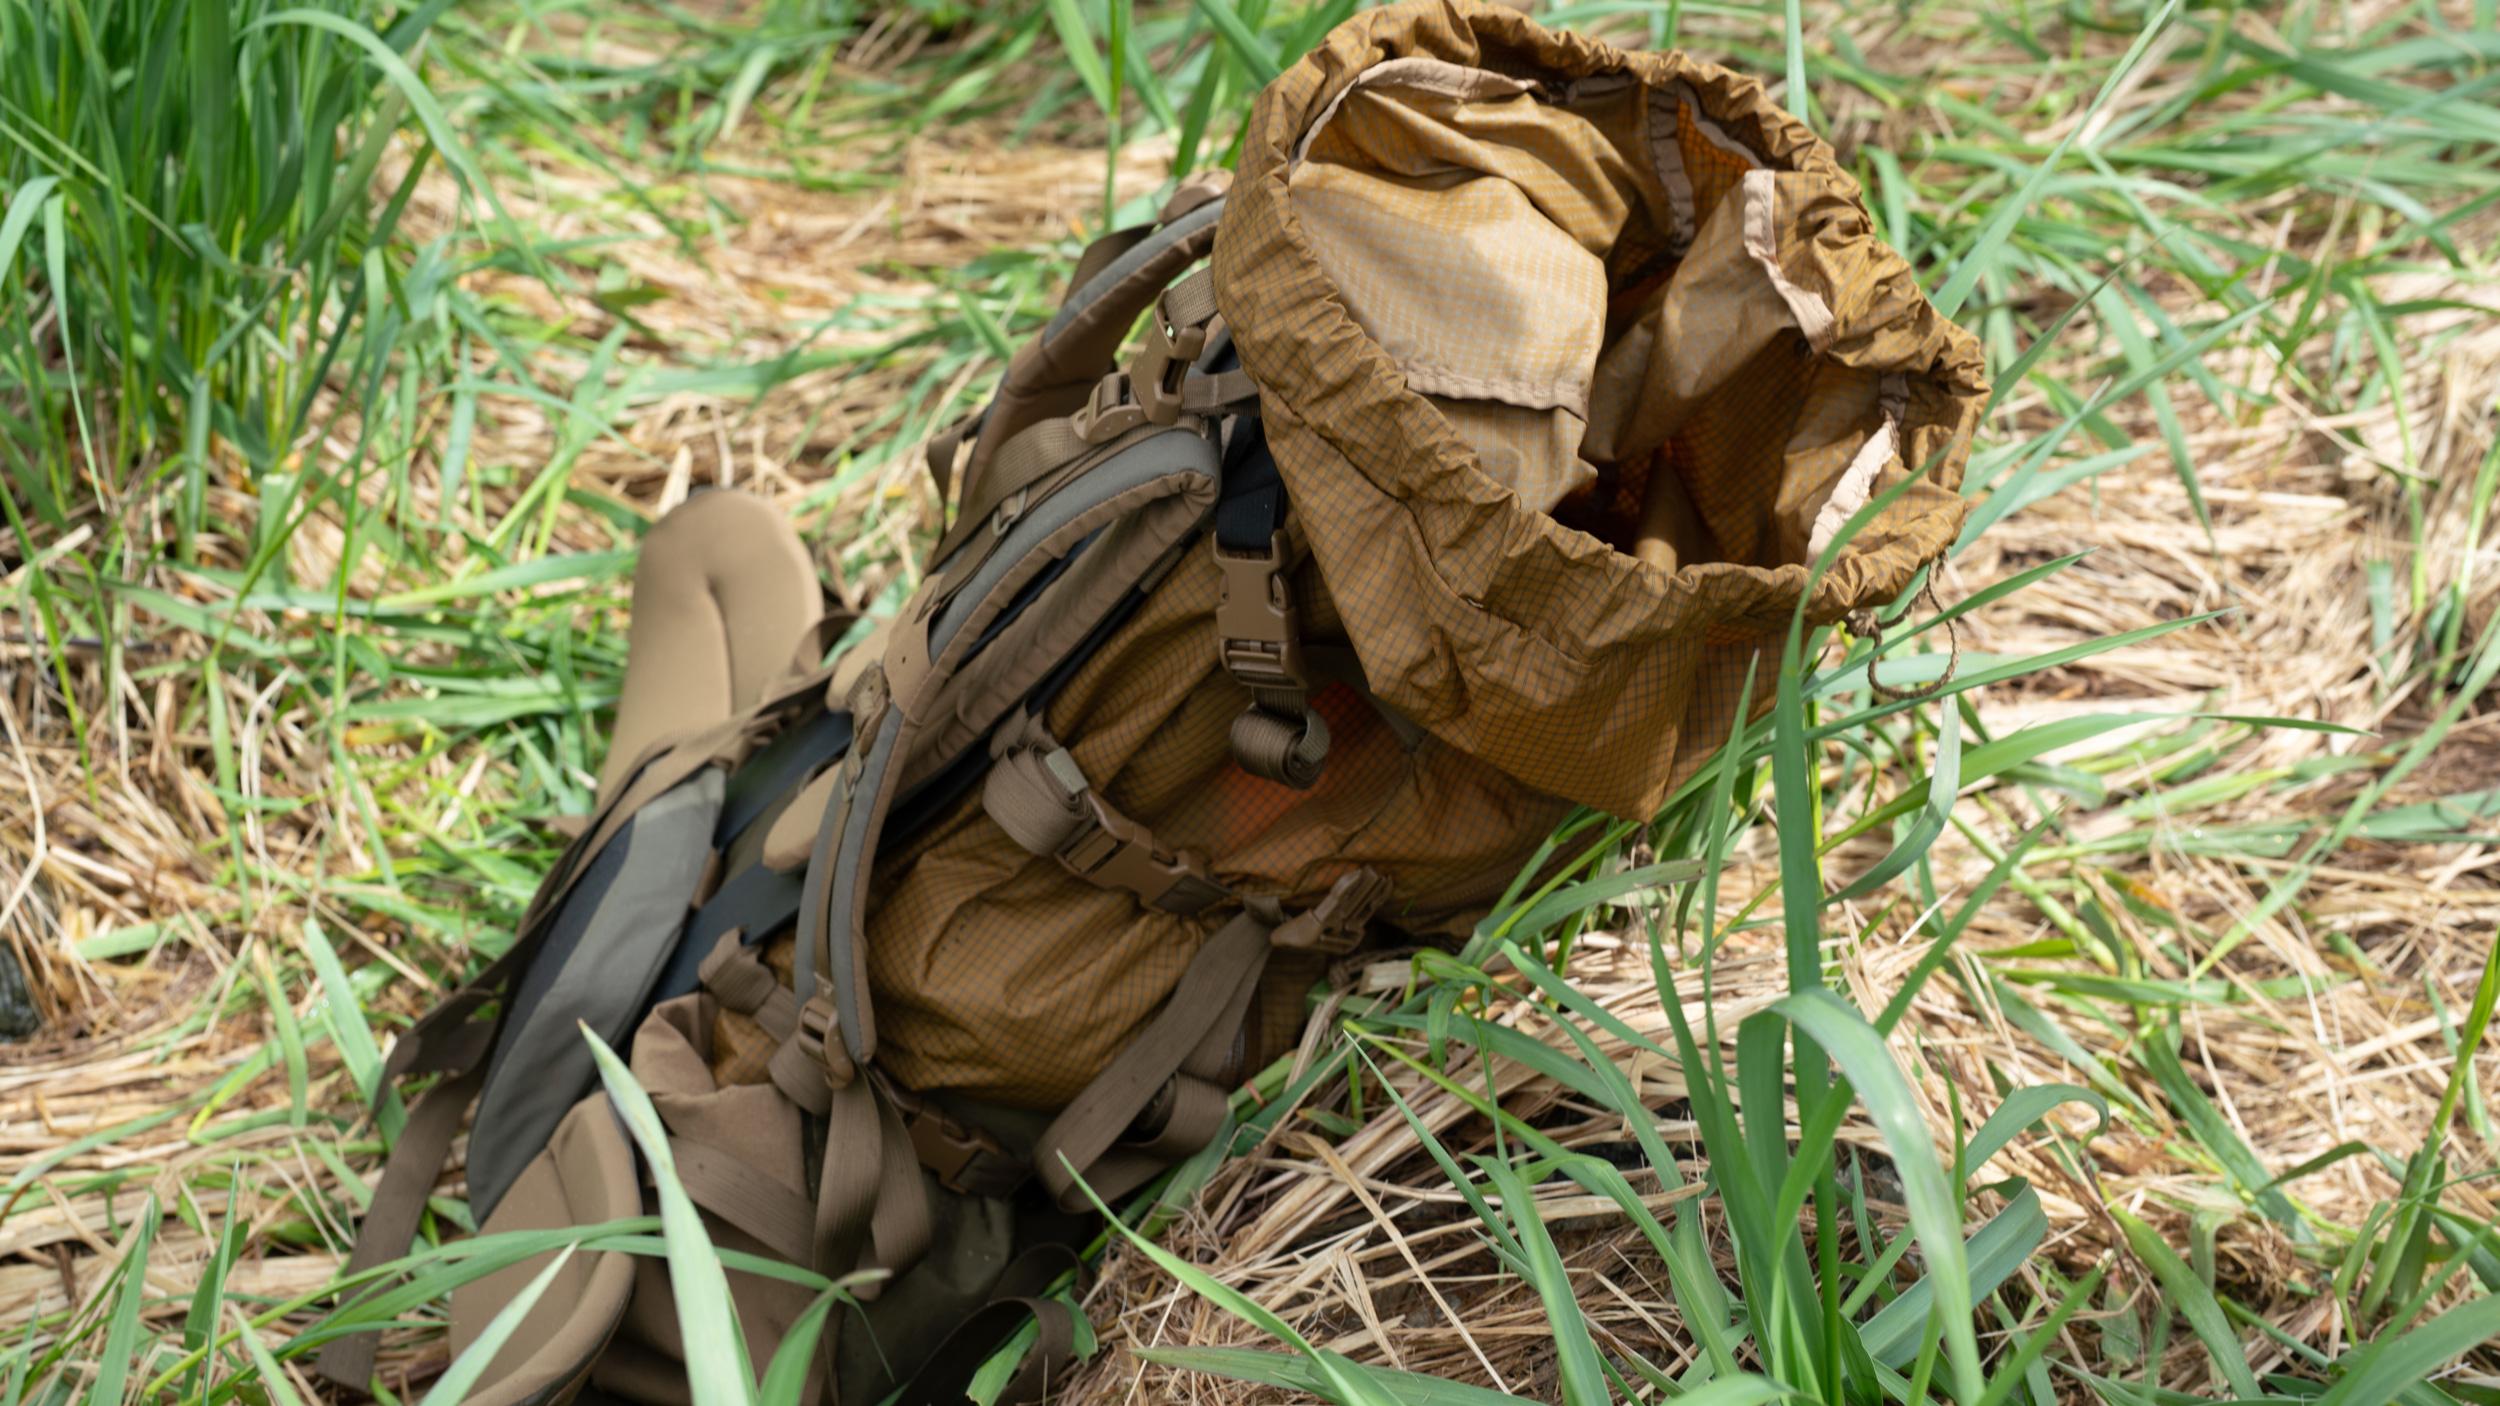 Auto-locking buckles and features of Kifaru Absaroka hunting backpack